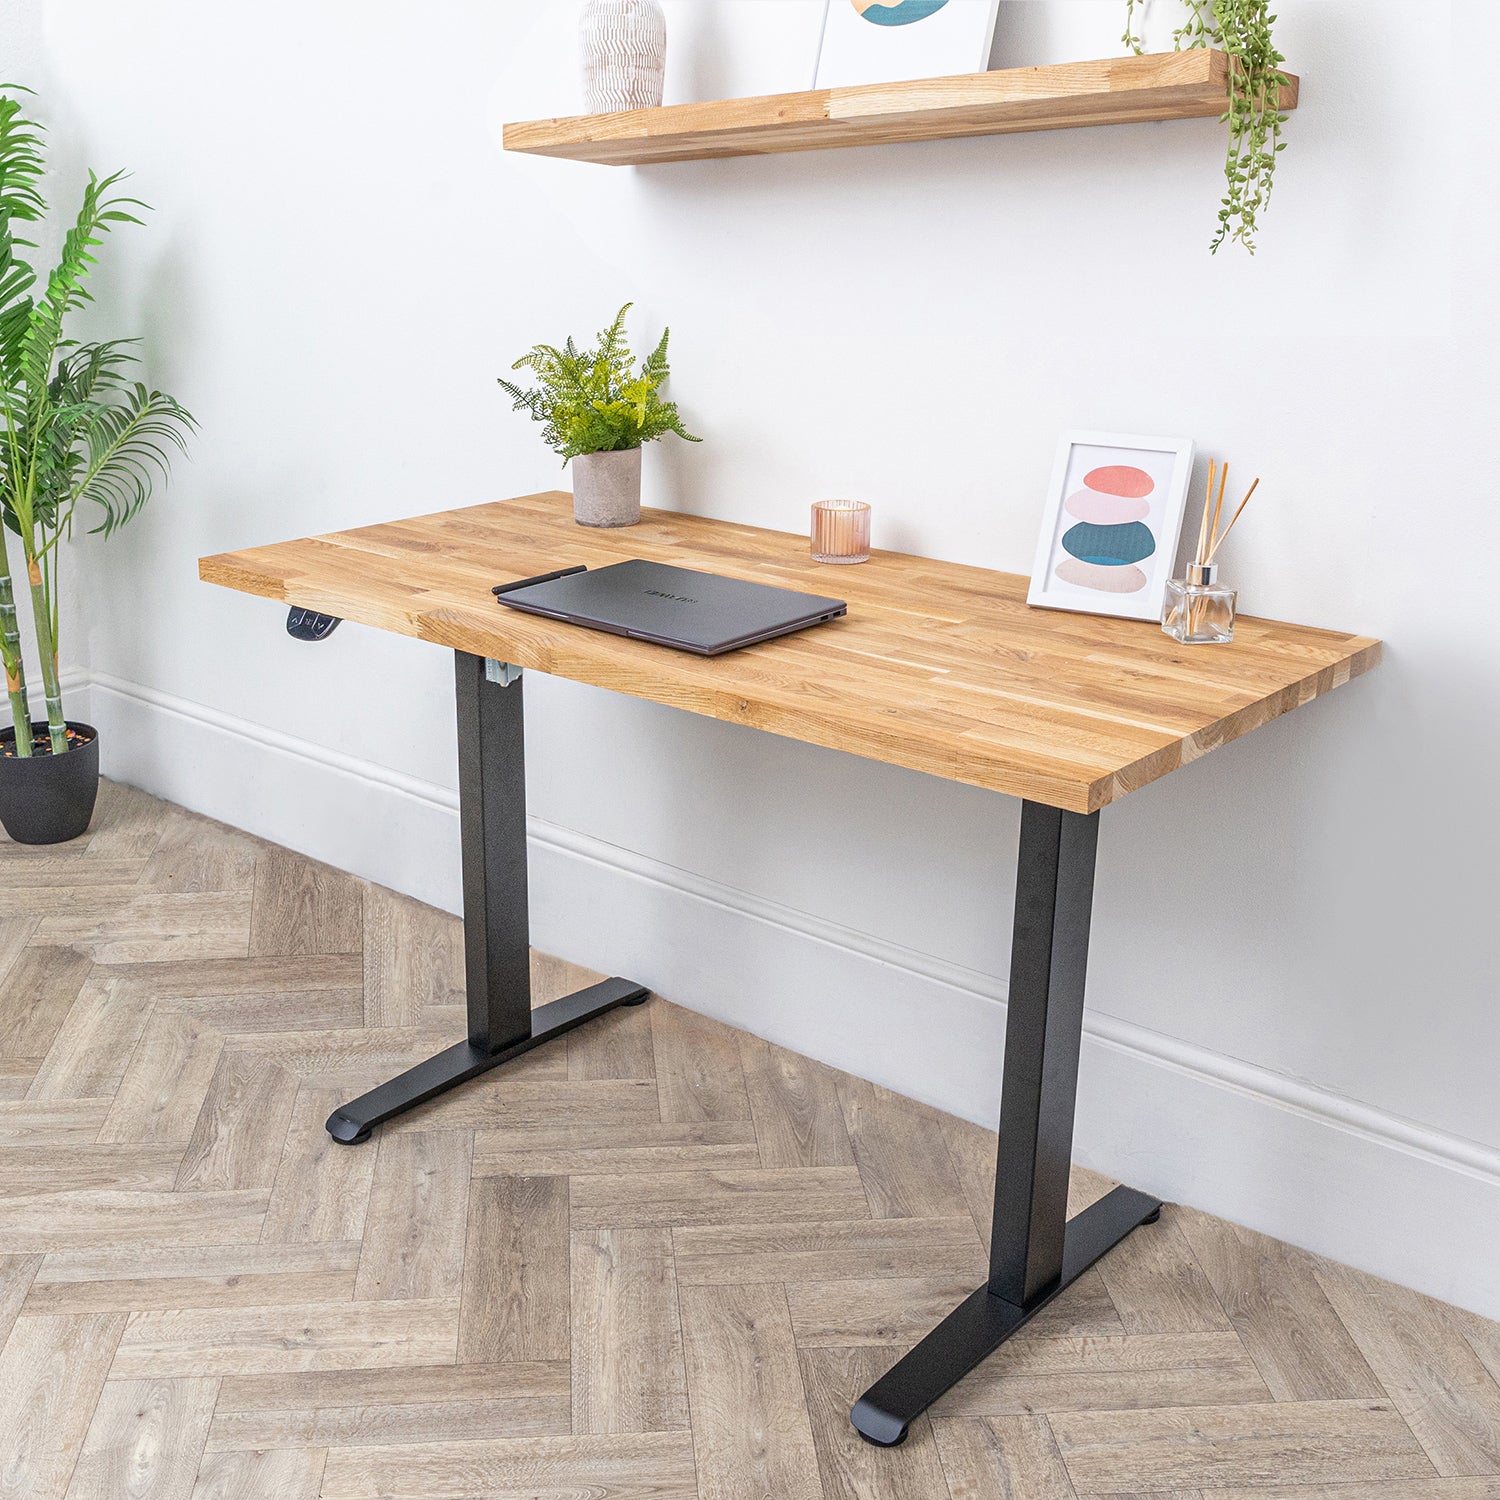 Levado™ Sit-Stand Desk from Posturite